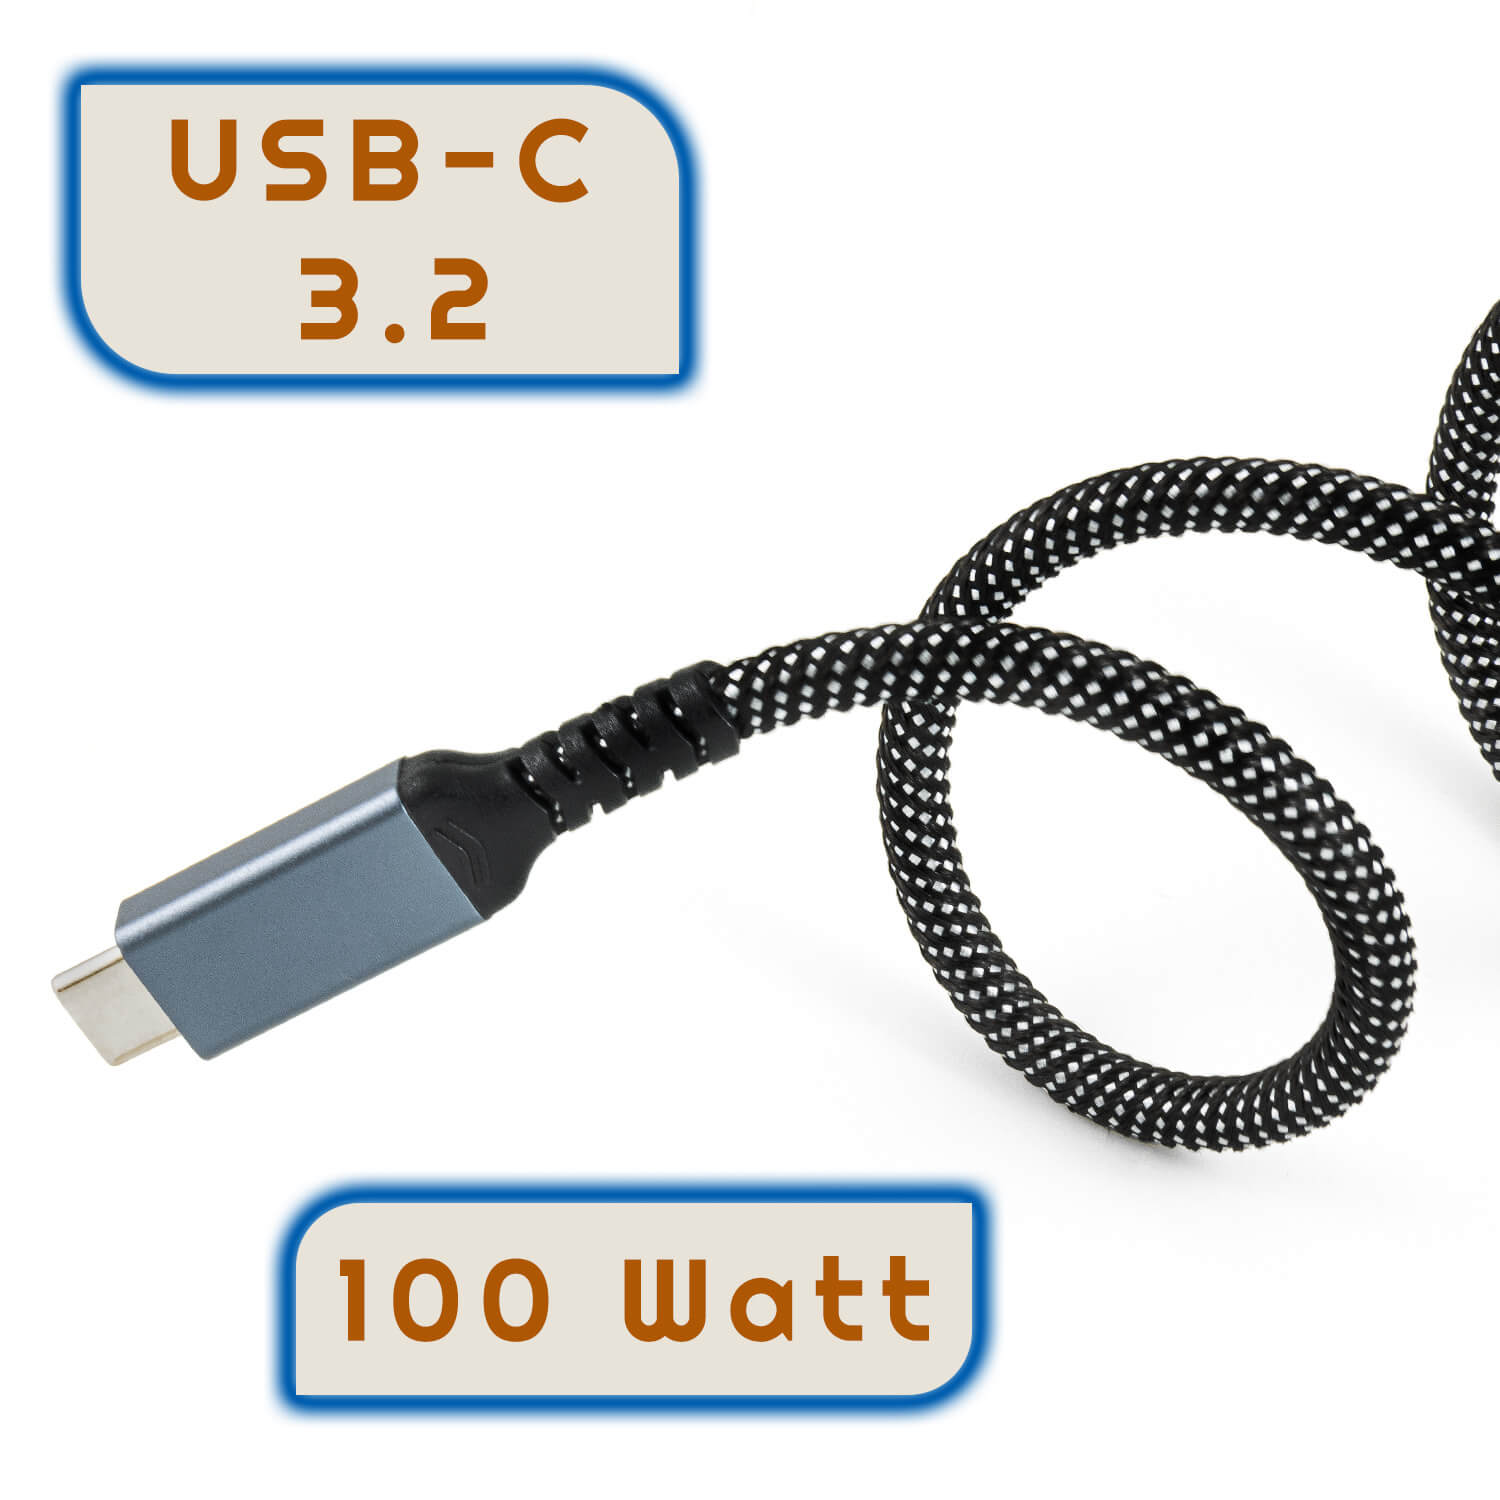 USB-C-schnellladekabel-100watt-super-charger-kabel-3